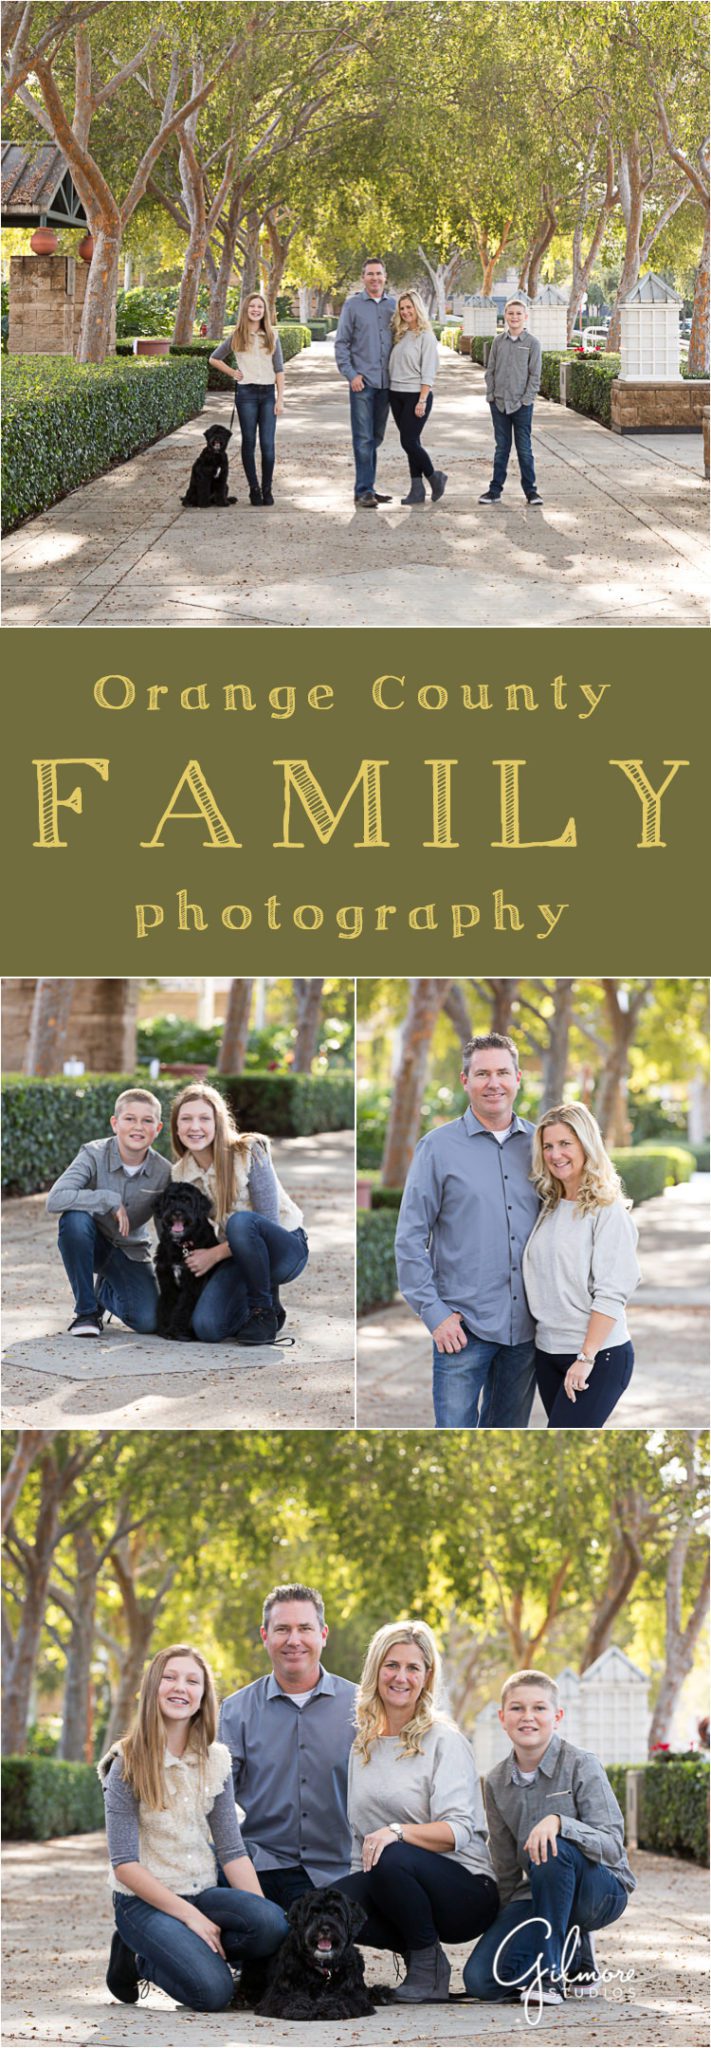 Irvine family portrait photographer